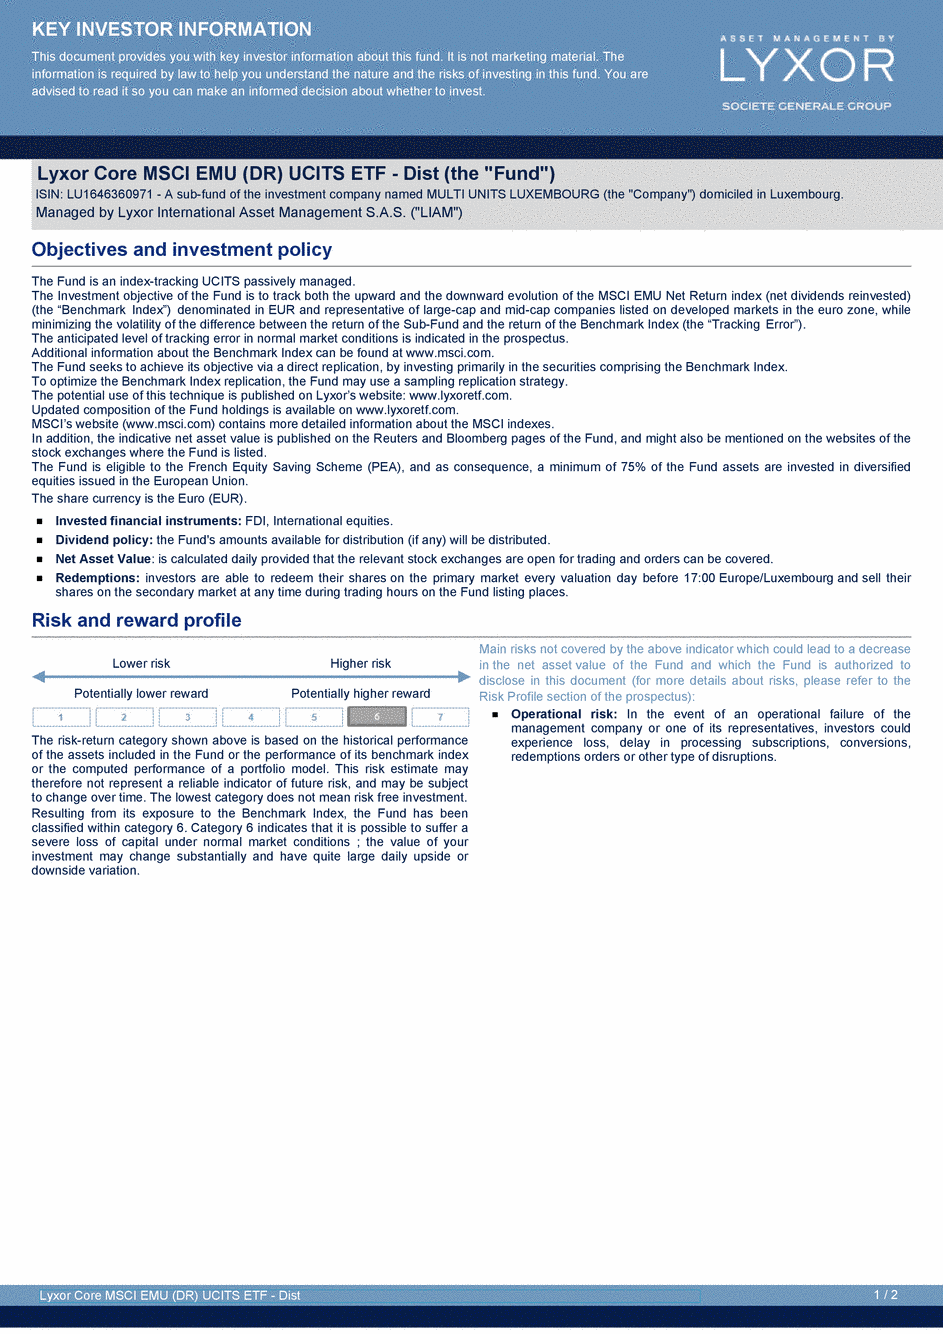 DICI Lyxor Core MSCI EMU (DR) UCITS ETF - Dist - 19/02/2021 - Anglais